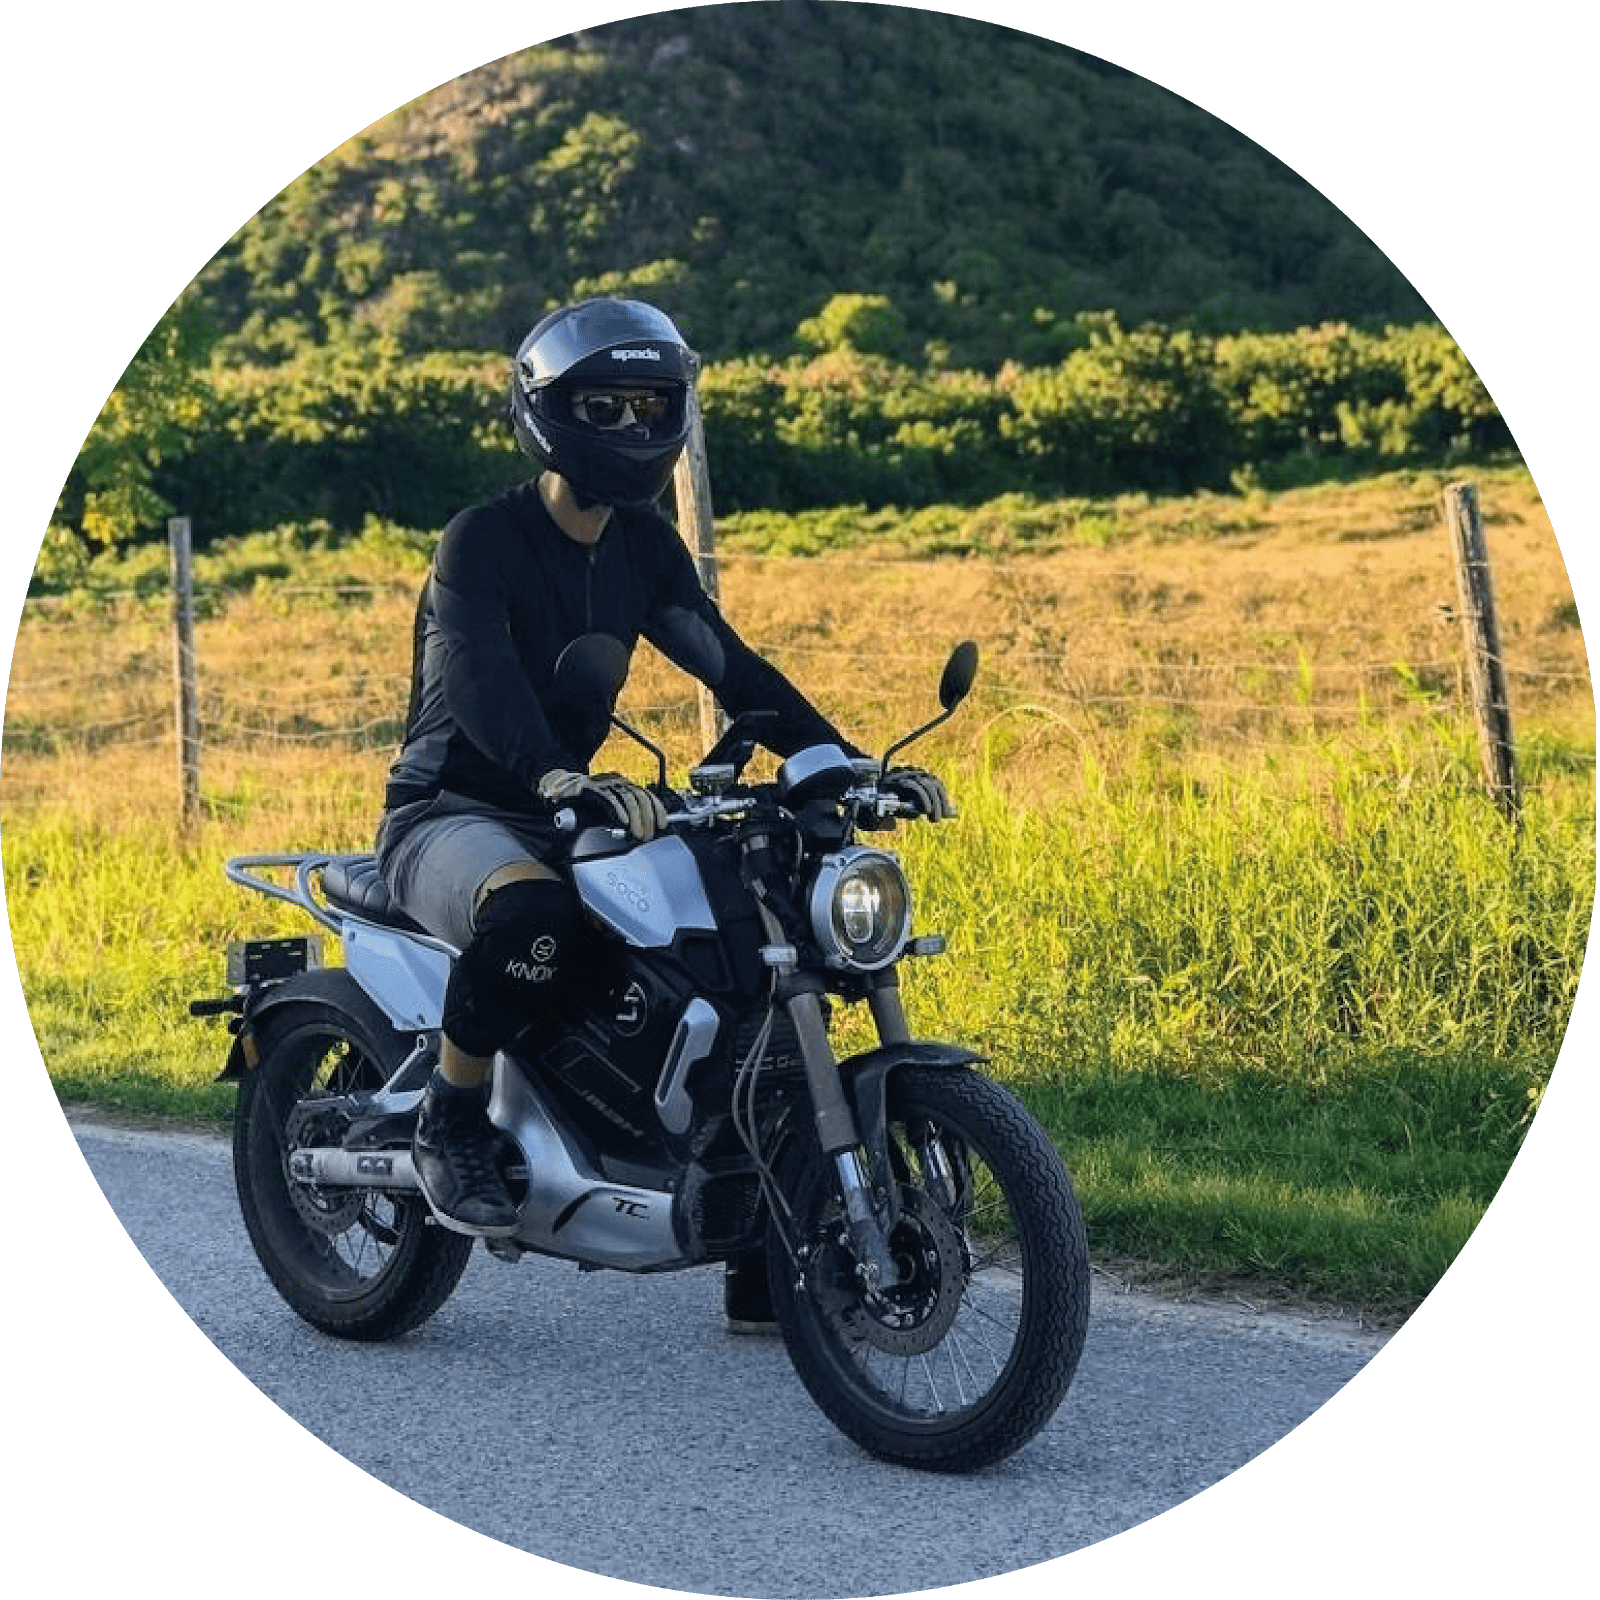 Paul Mather portfolio career travel on motorcycle